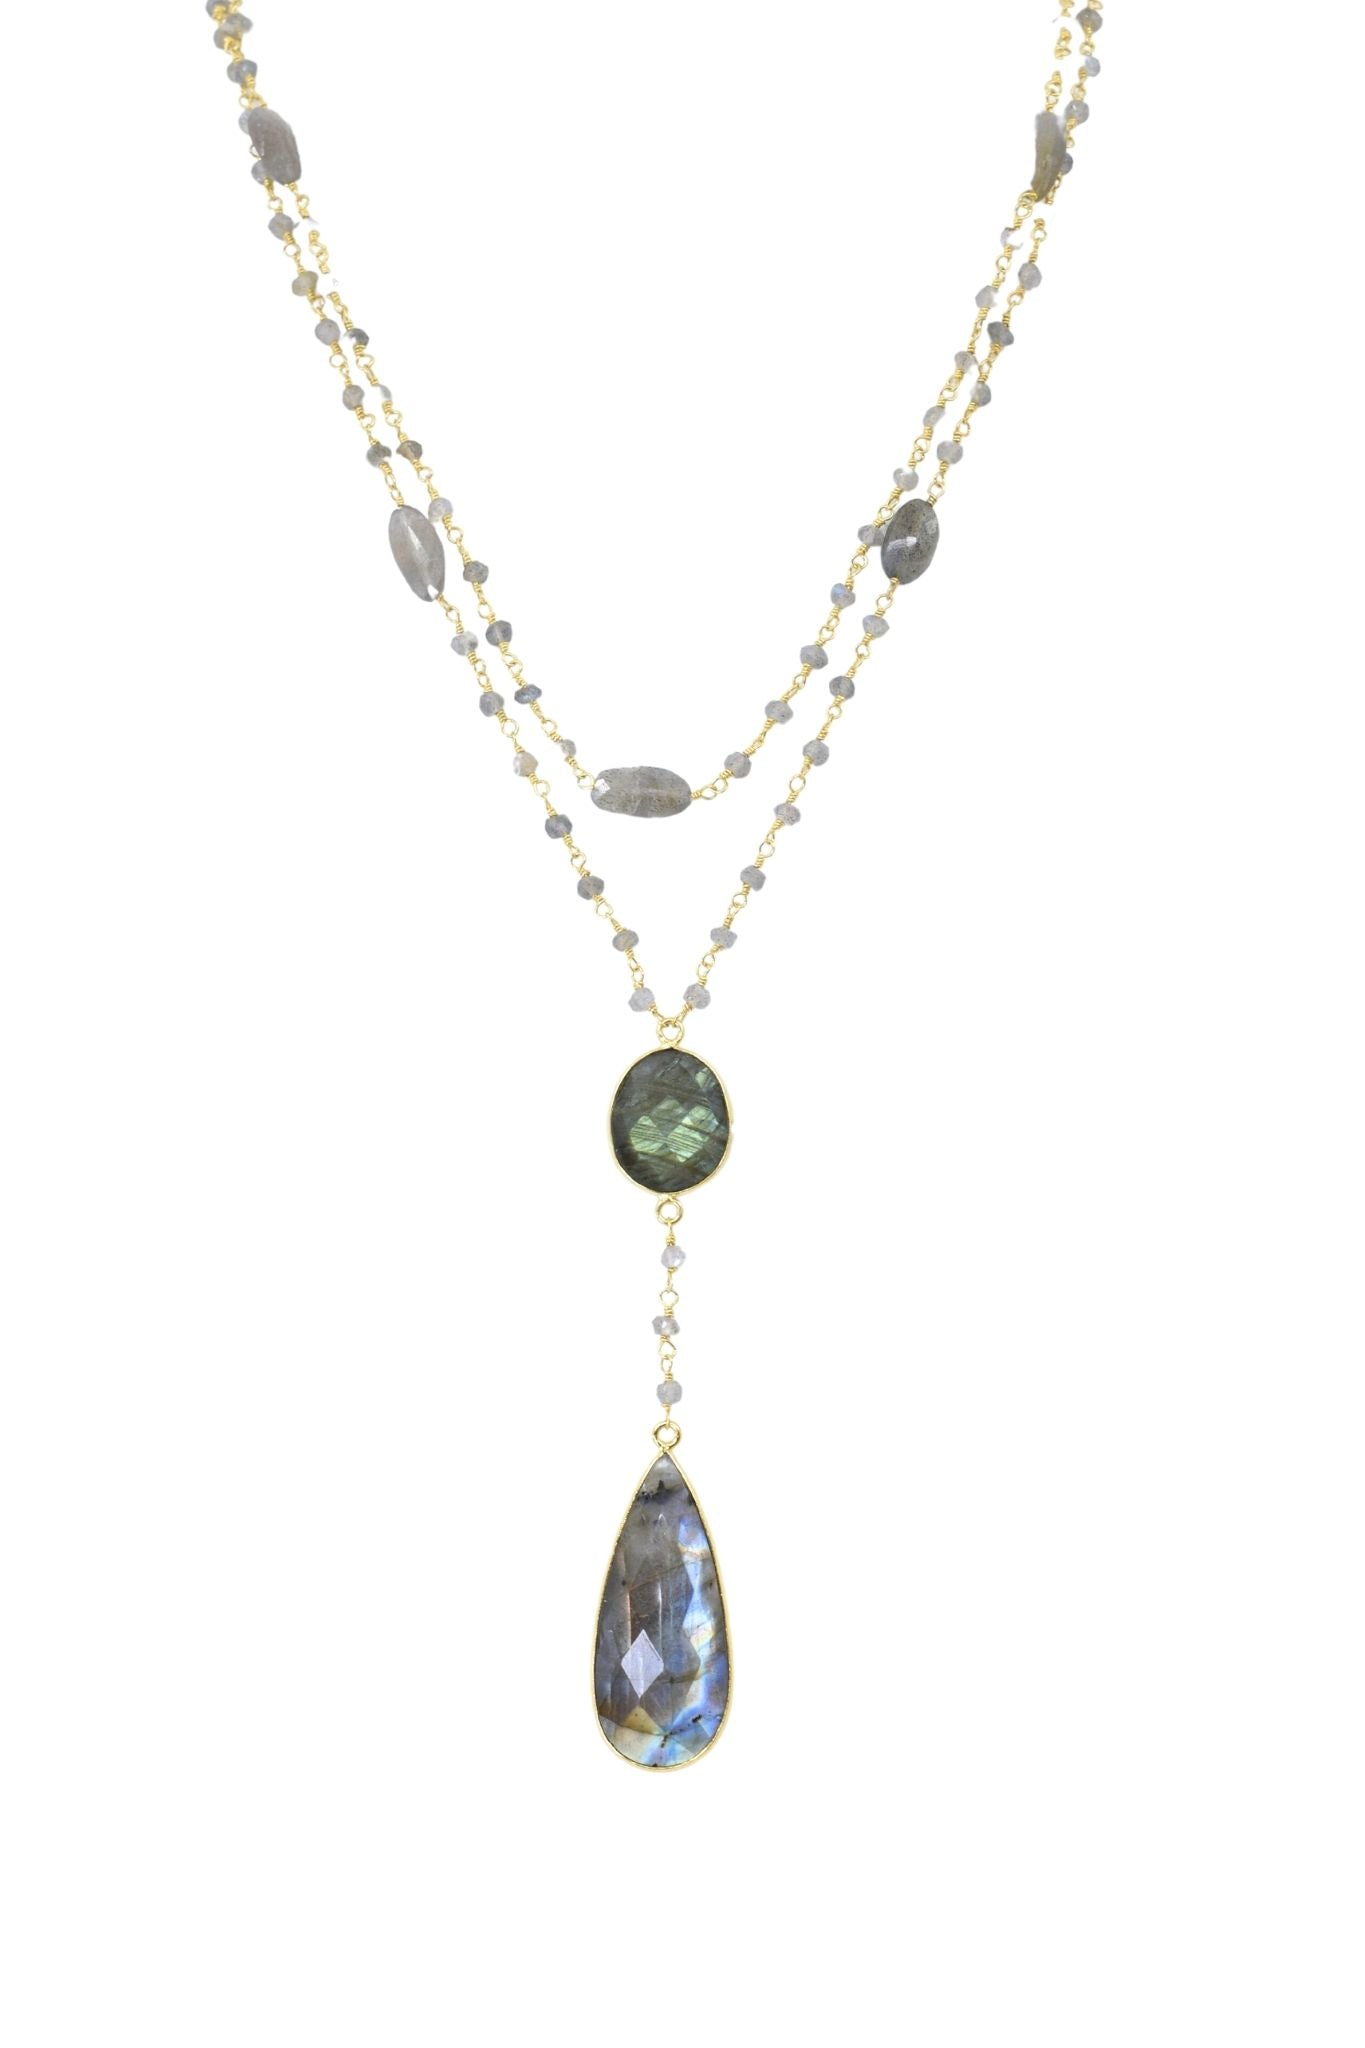 Double Diana Denmark Necklace in Labradorite with Labradorite Drop